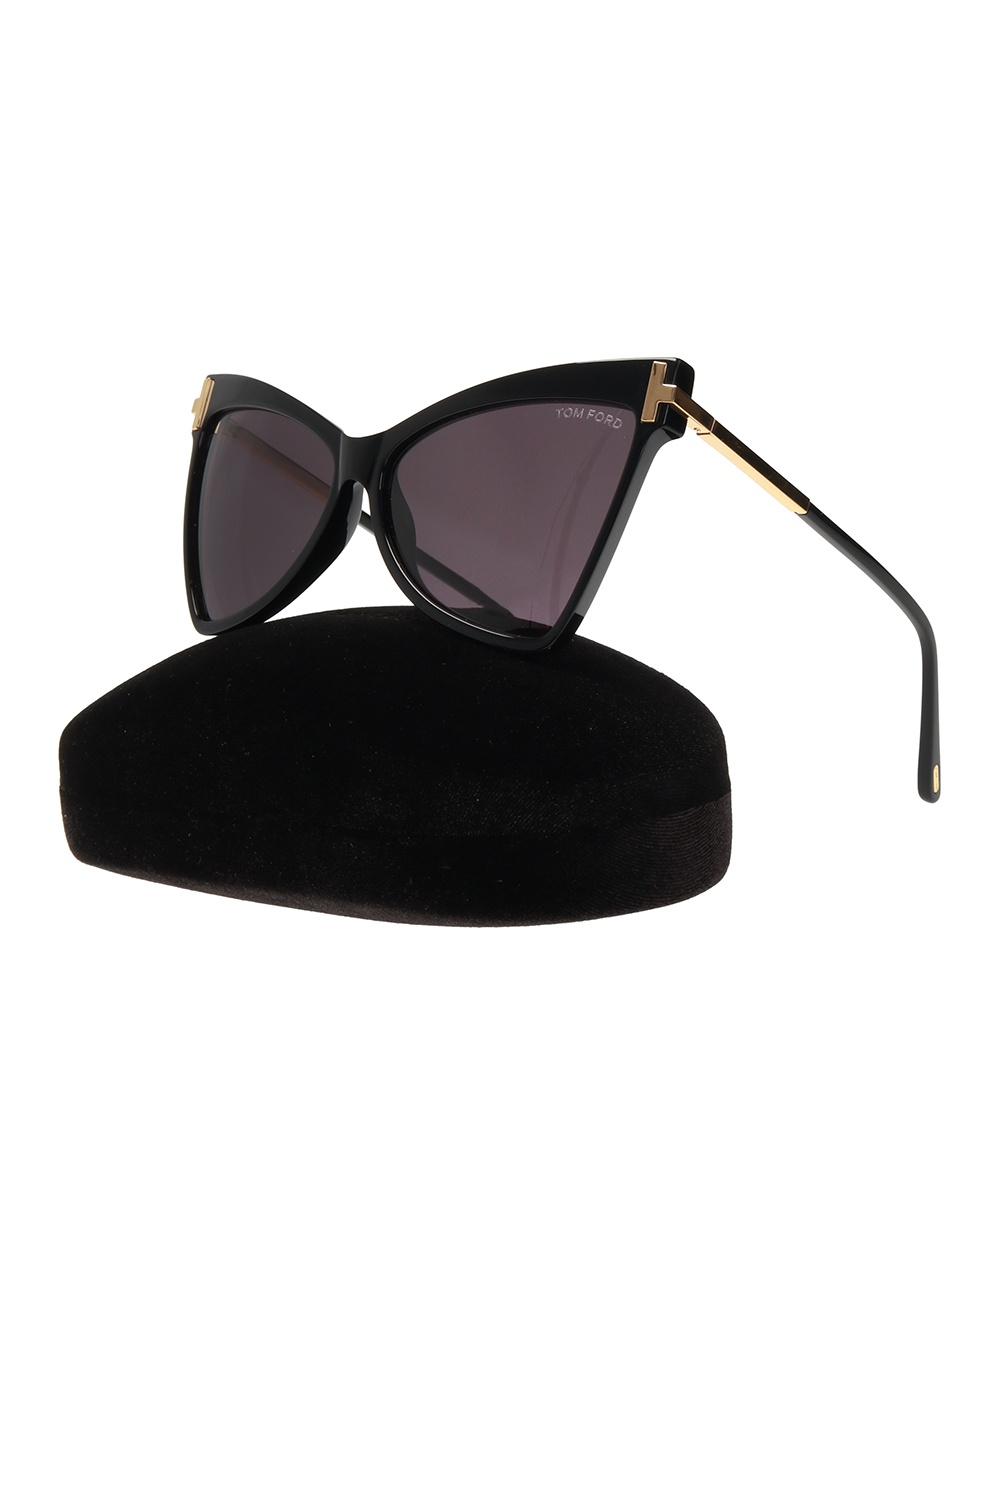 Black 'Tallulah' sunglasses Tom Ford - Vitkac Australia